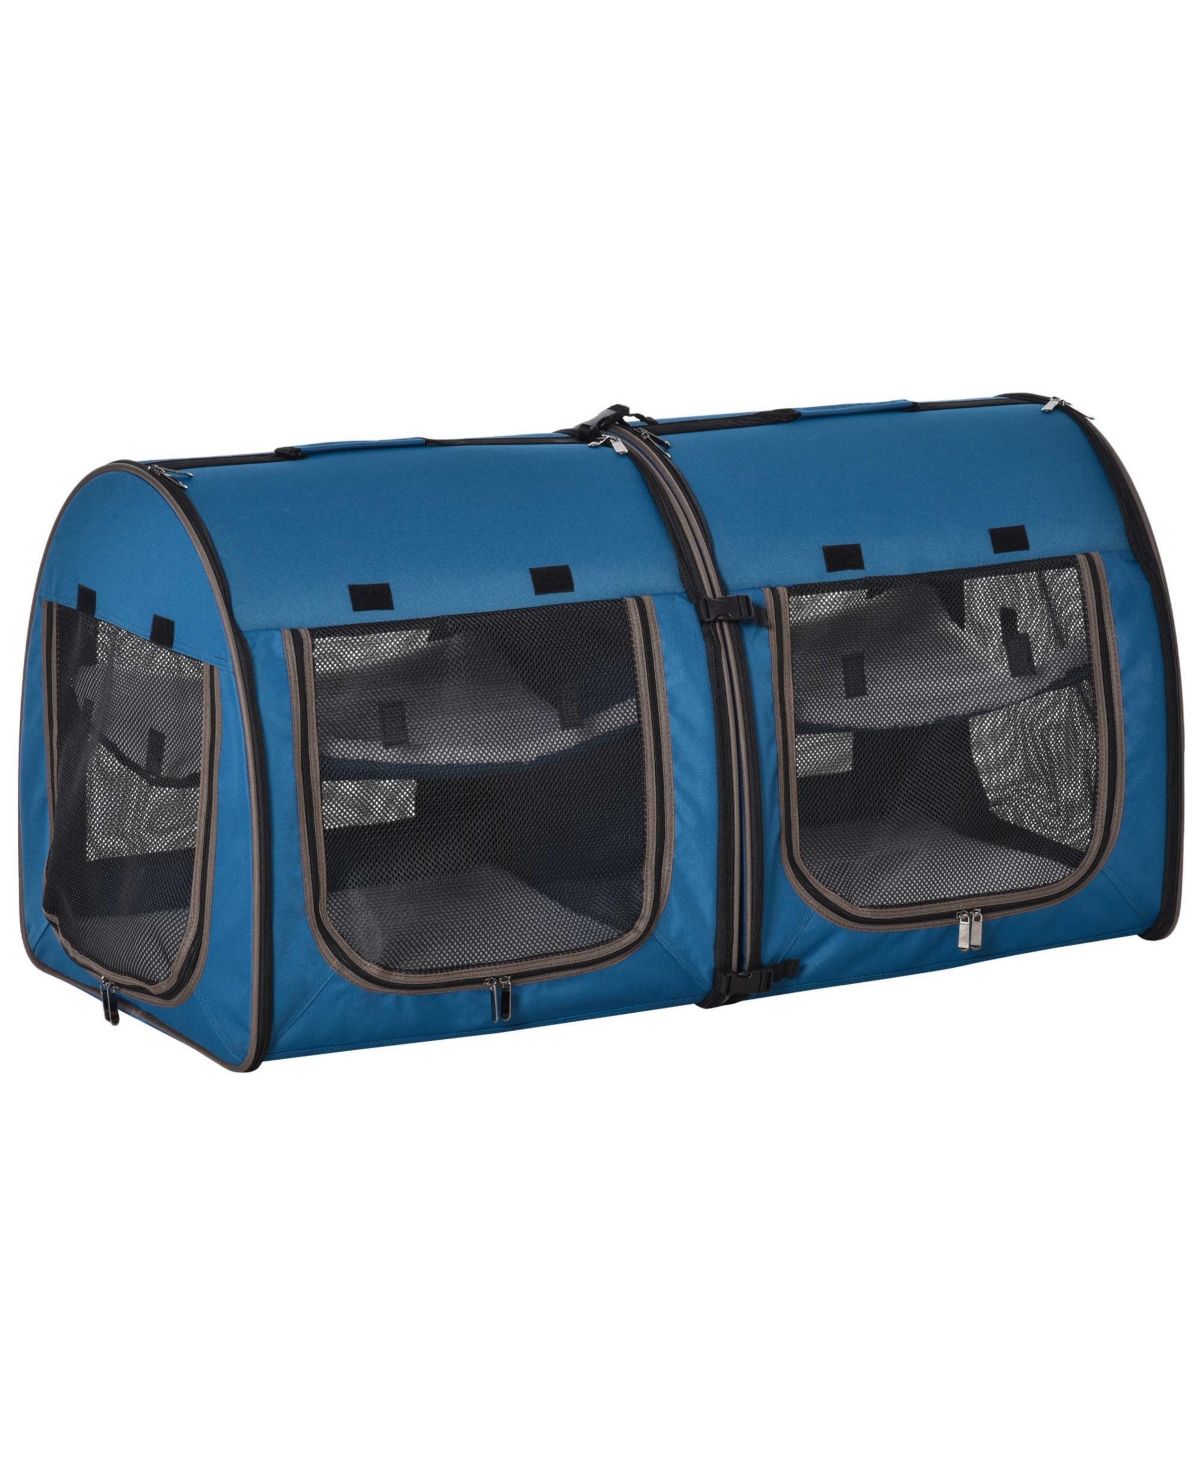 Large Portable Double Pet Carrier Kennel Bag Oxford Travel Car Seat - Blue